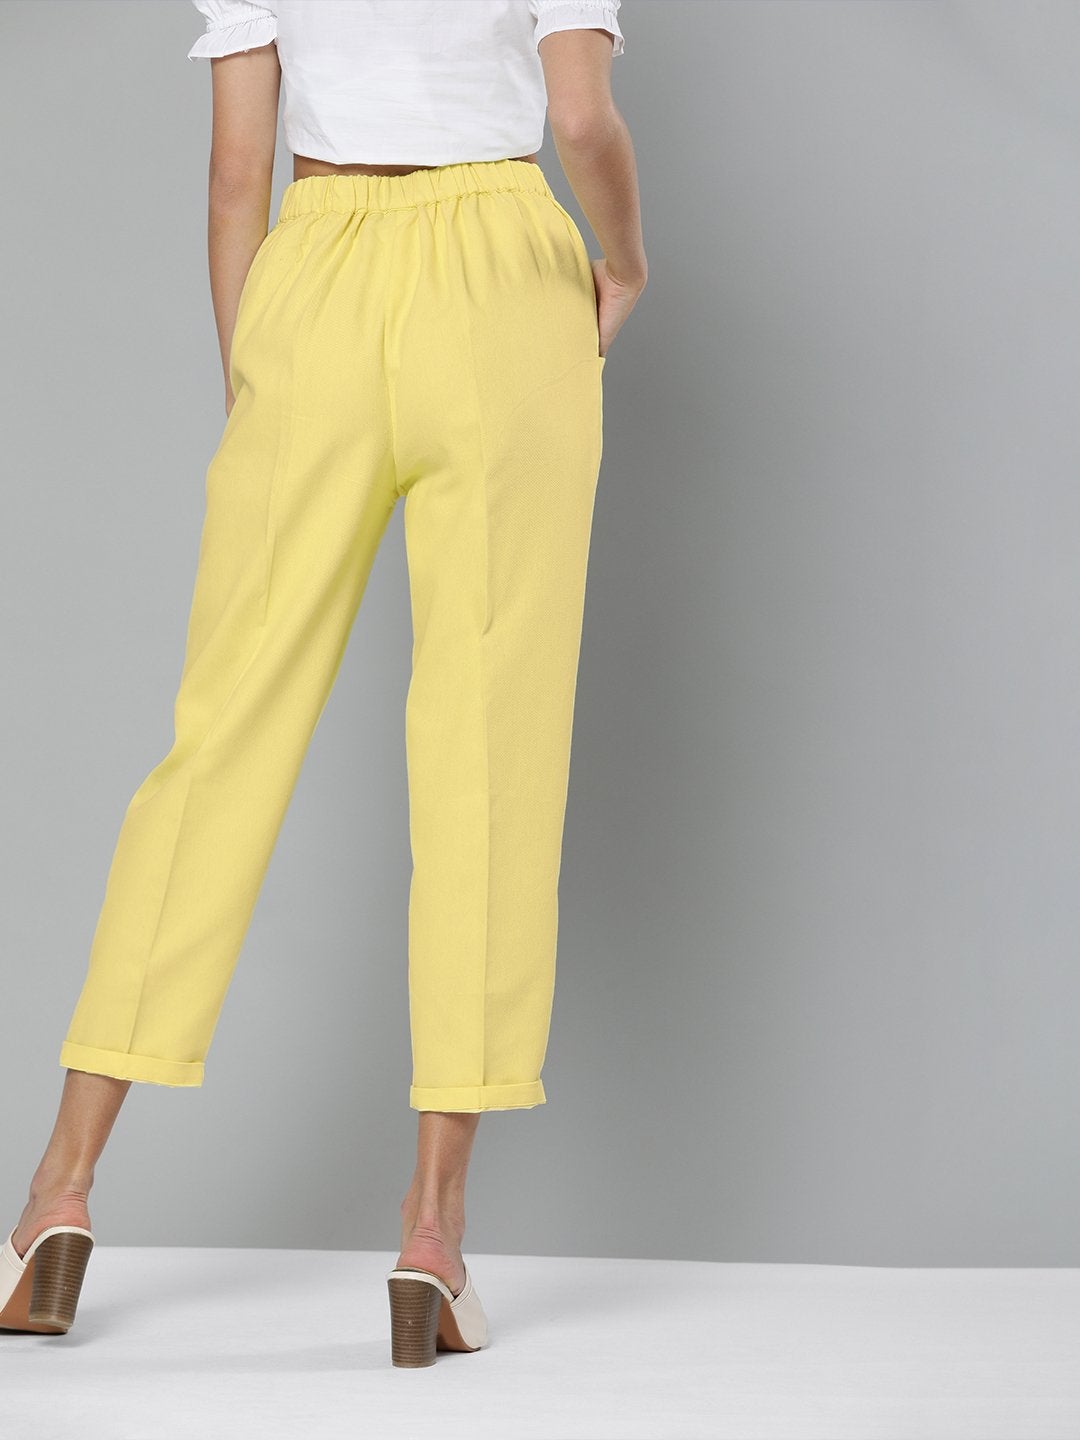 Women's Yellow Tapered Pants - SASSAFRAS